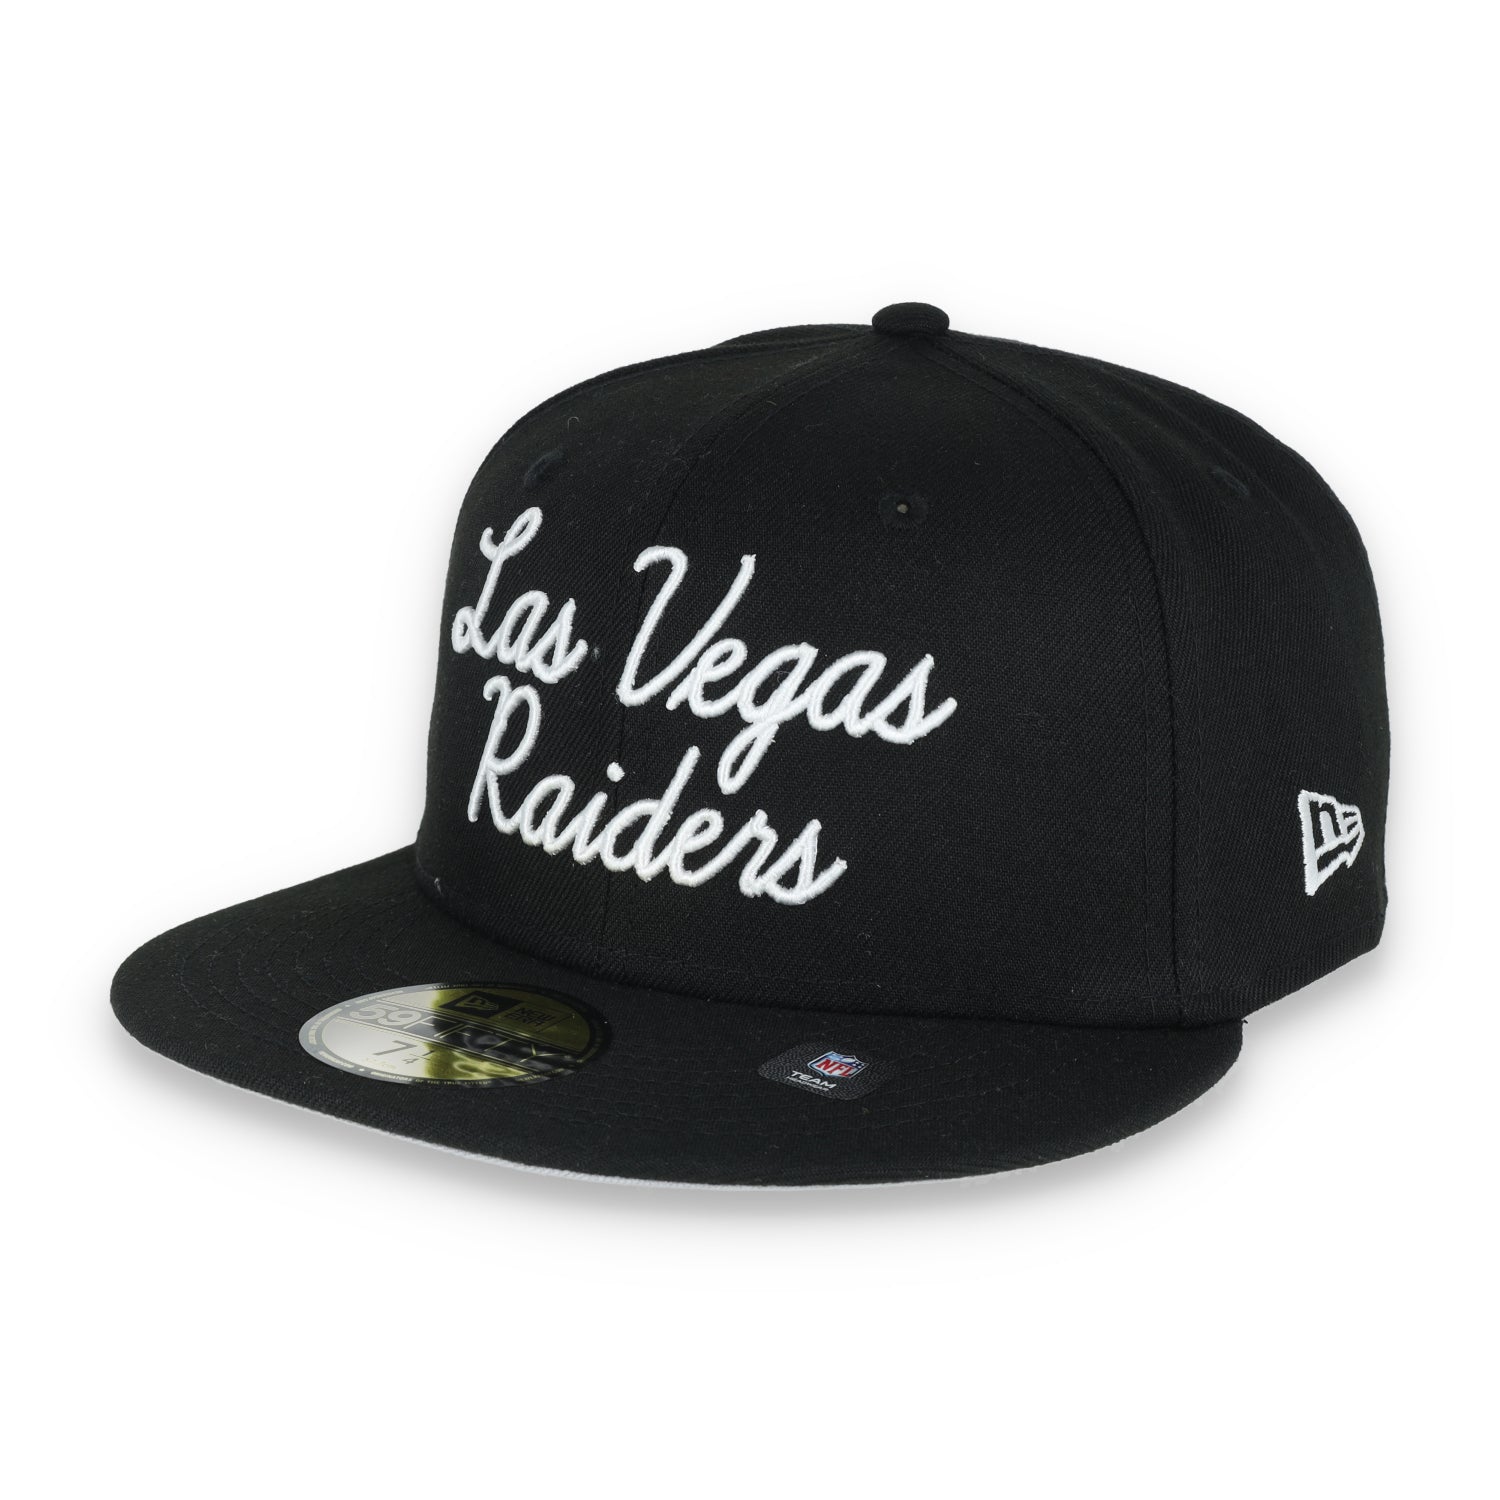 New Era Las Vegas Raiders Fairway Script 59FIFTY Fitted Hat